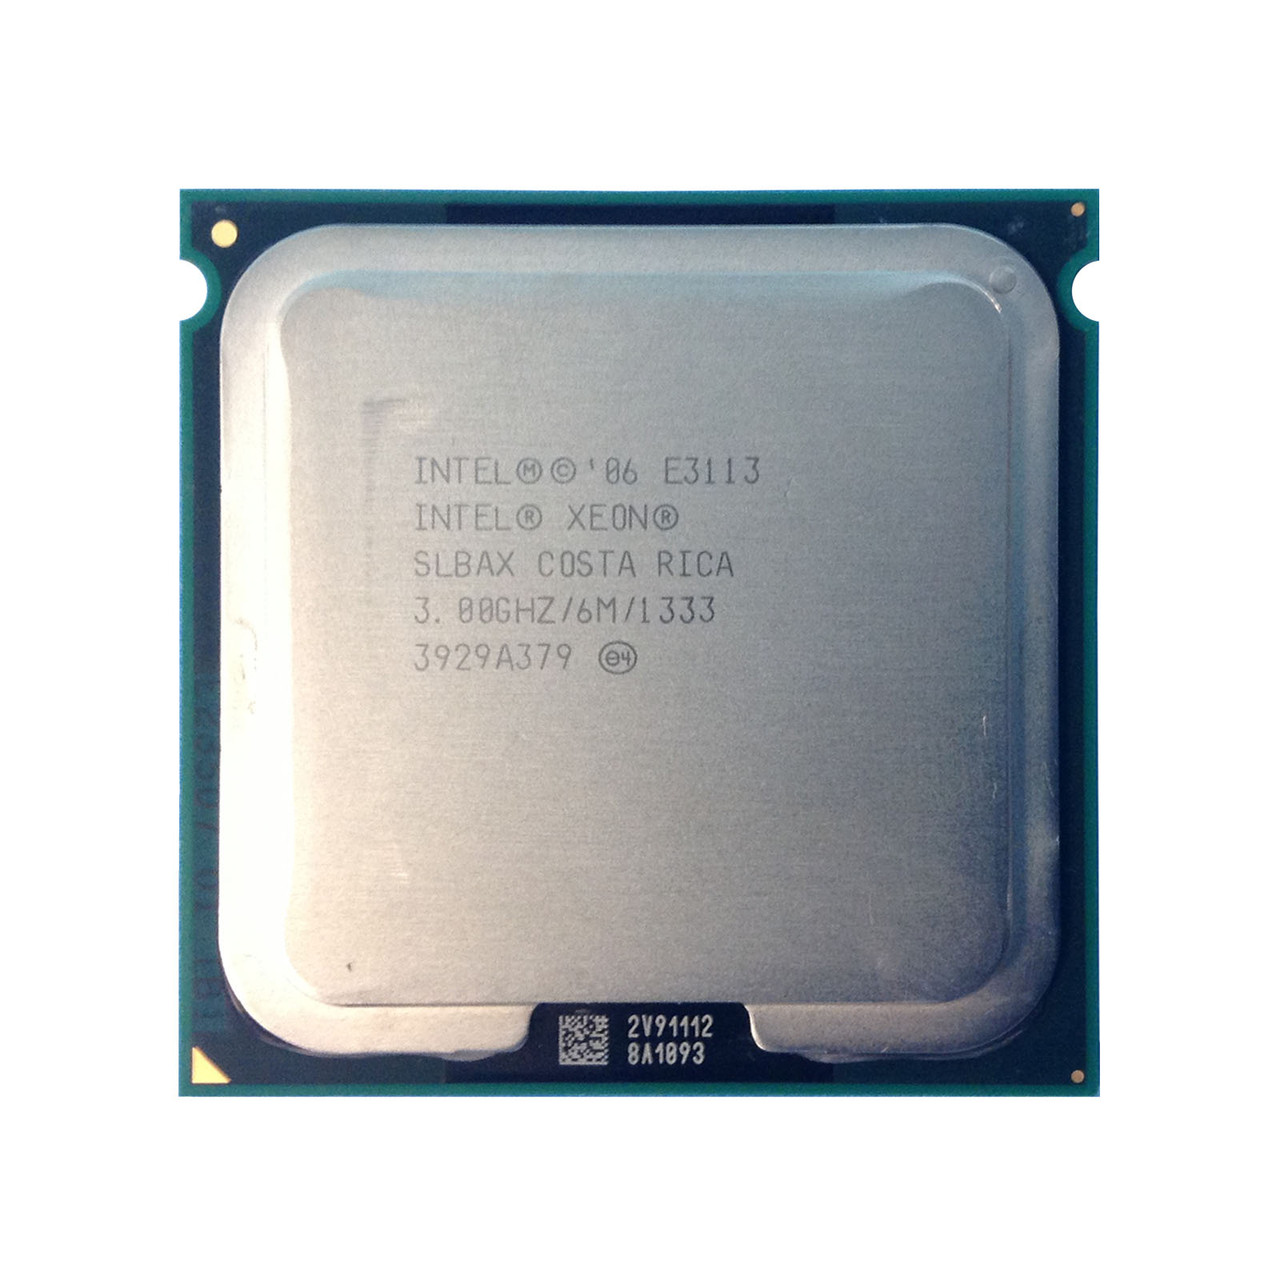 Intel SLBAX Xeon E3113 DC 3.00Ghz 6MB 1333Mhz Processor